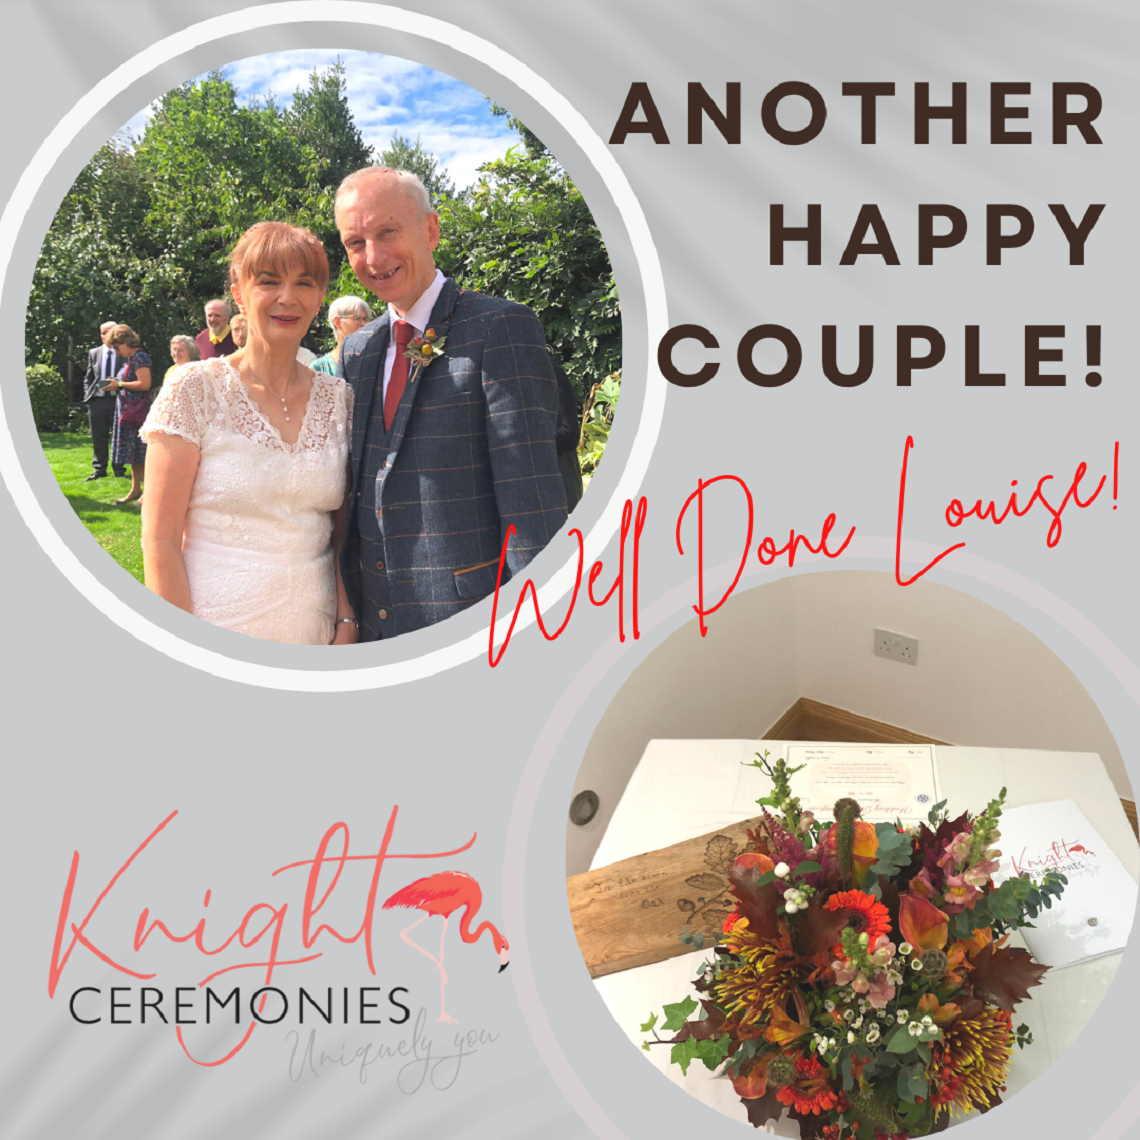 Louise Nicholas Knight Ceremonies happy couple